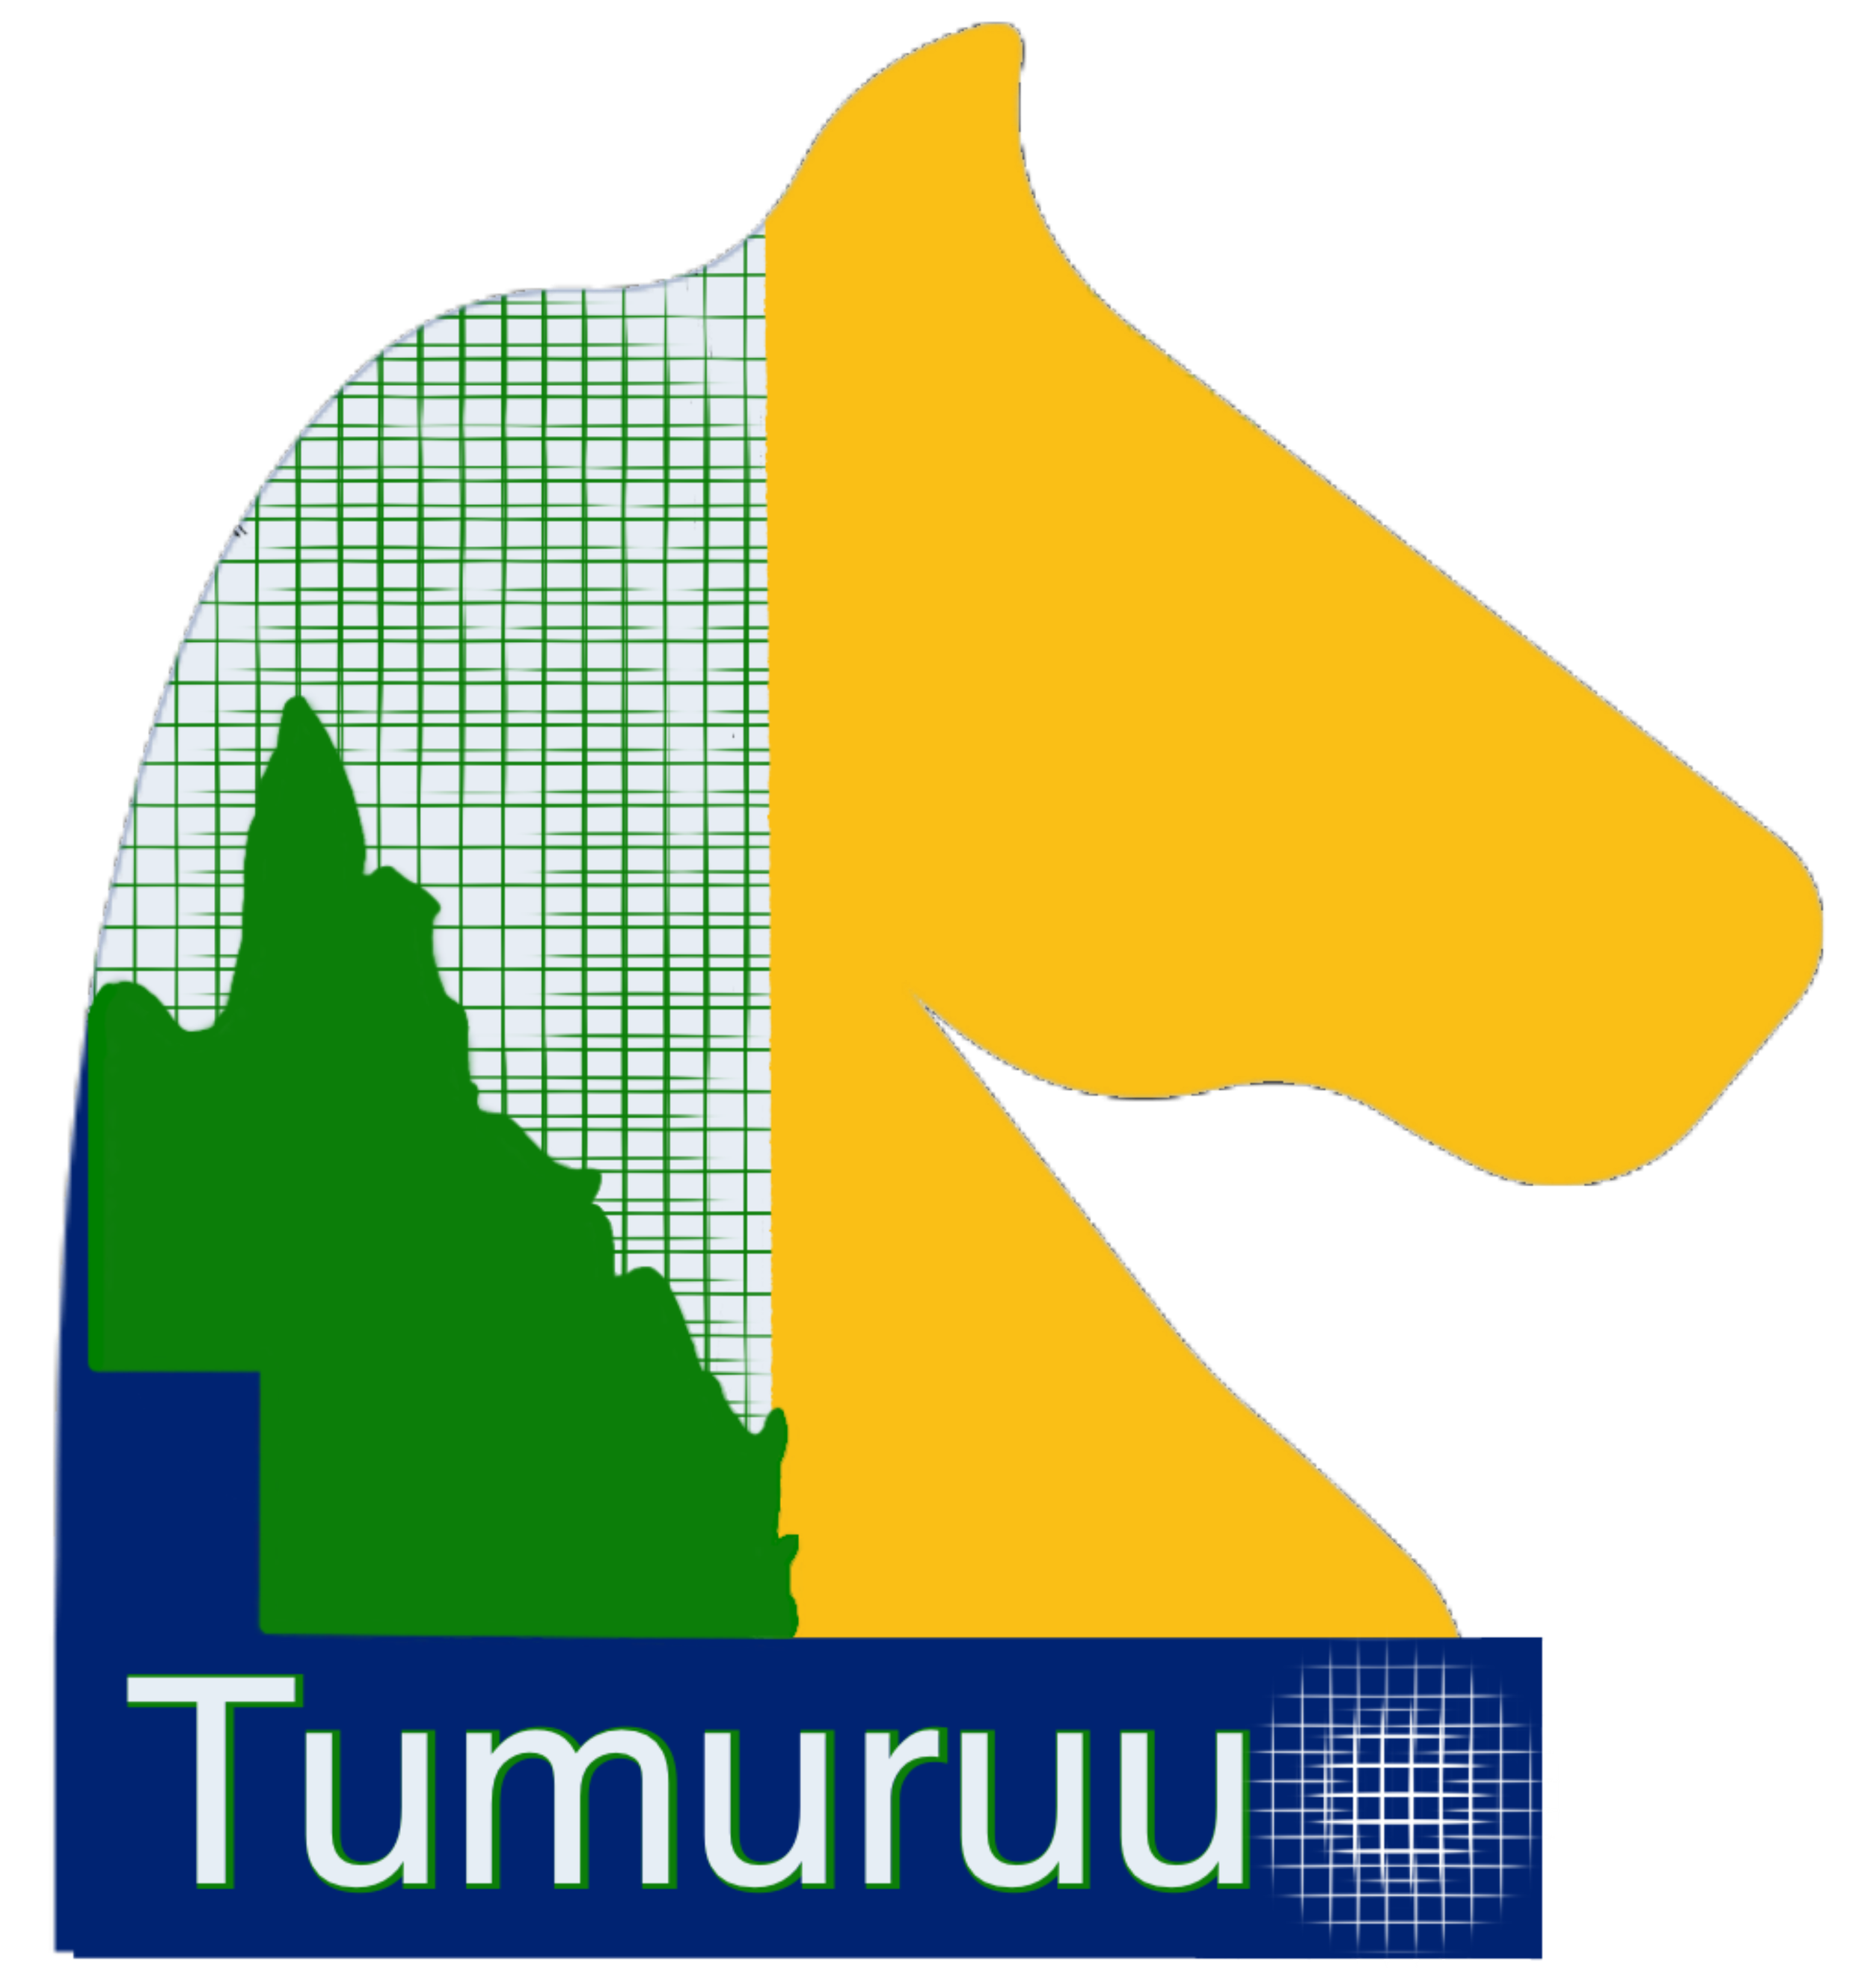 Tumuruu Logo Current.jpeg